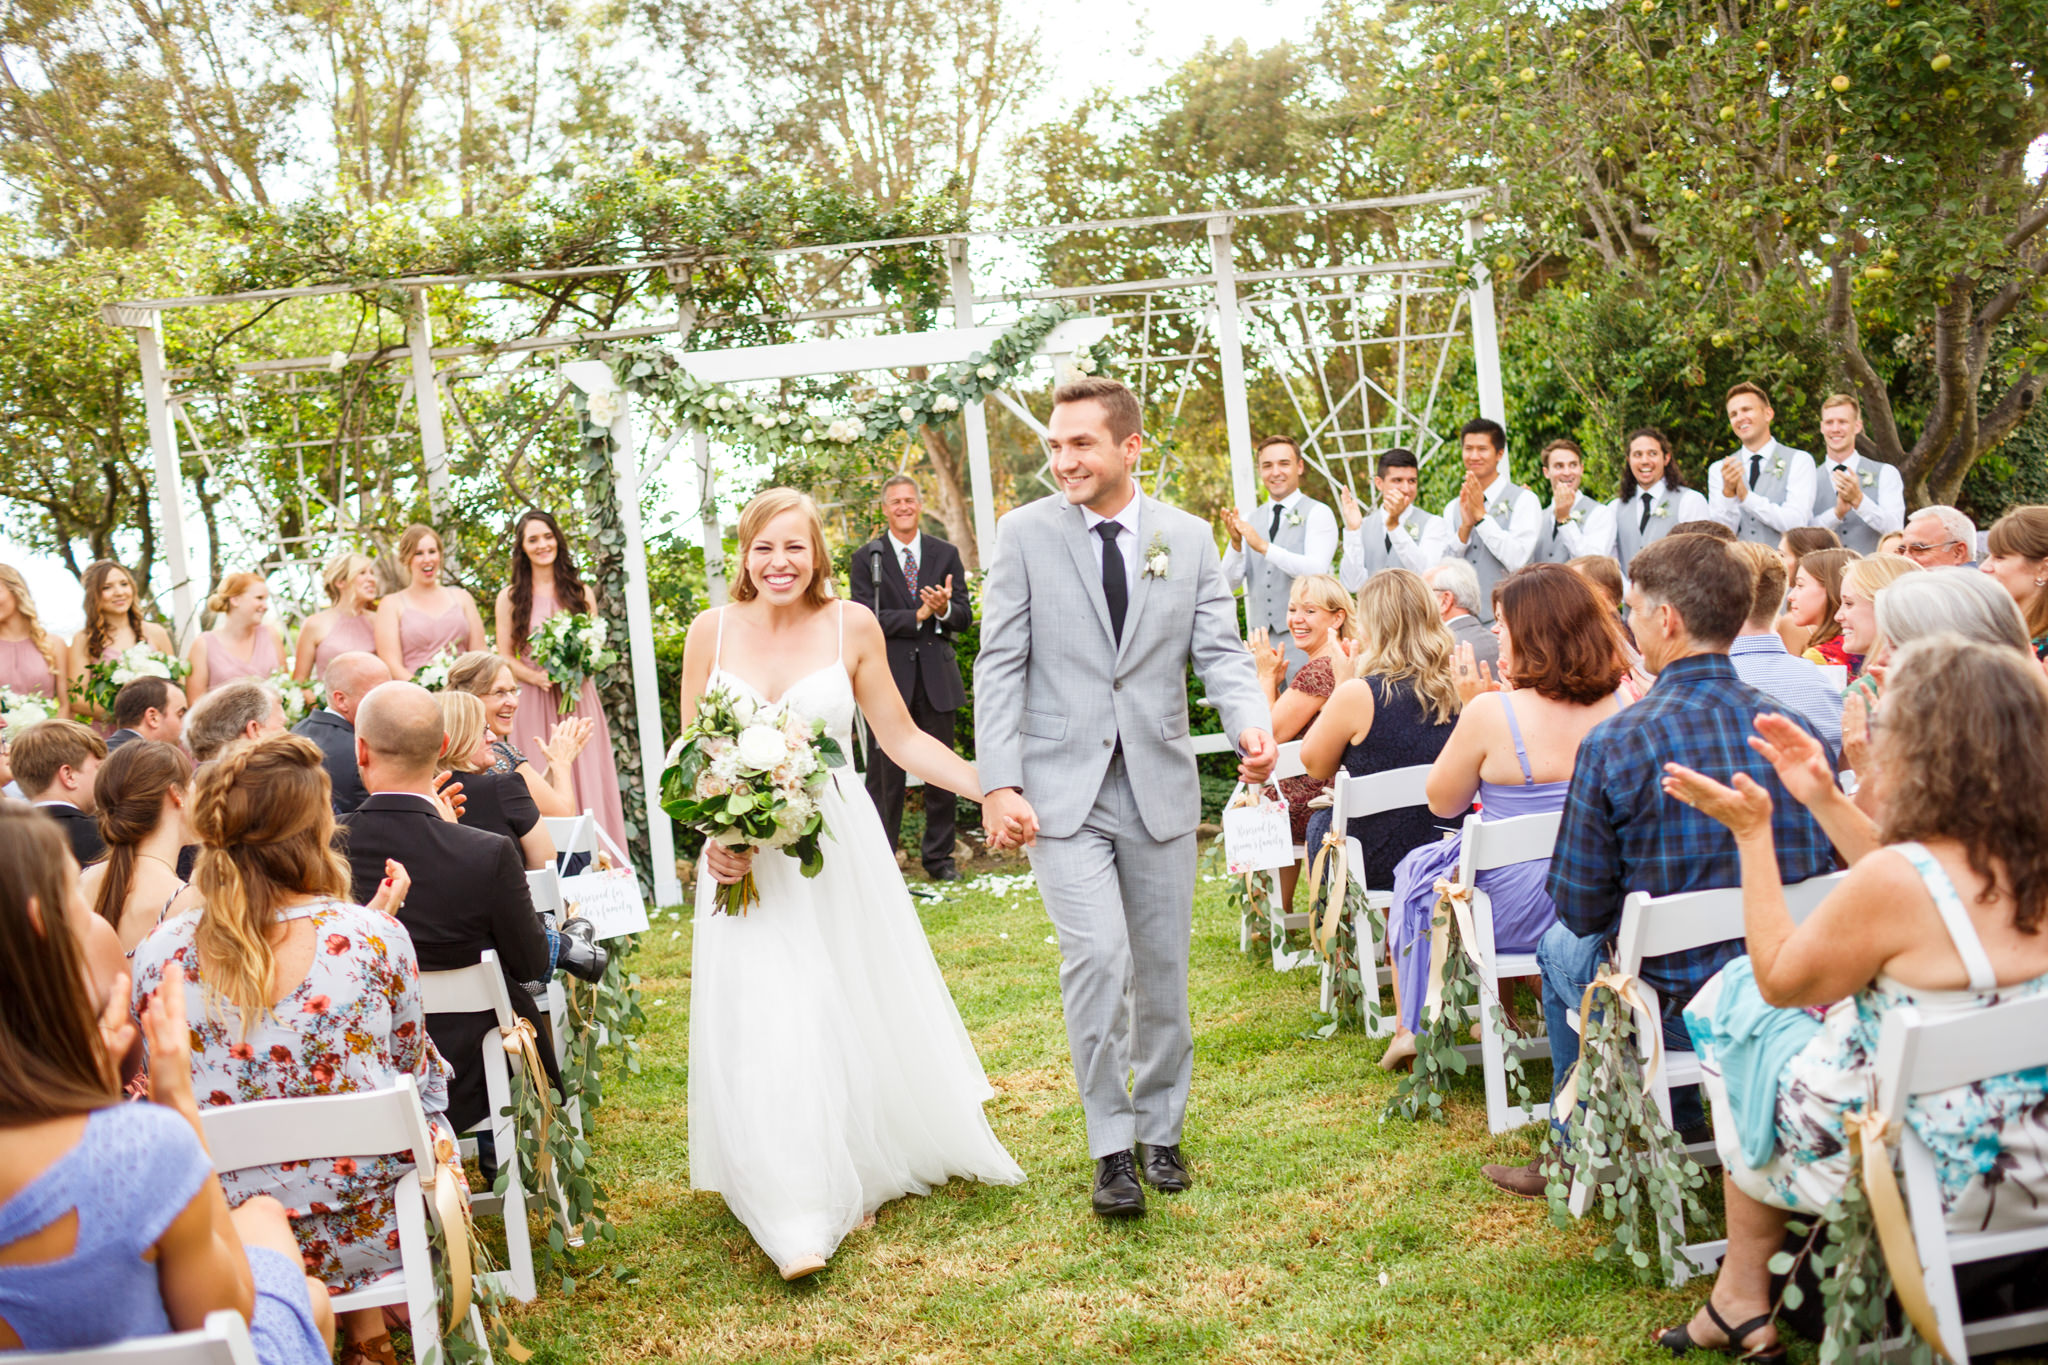 Central Coast Garden Wedding Venues - Dana Powers House